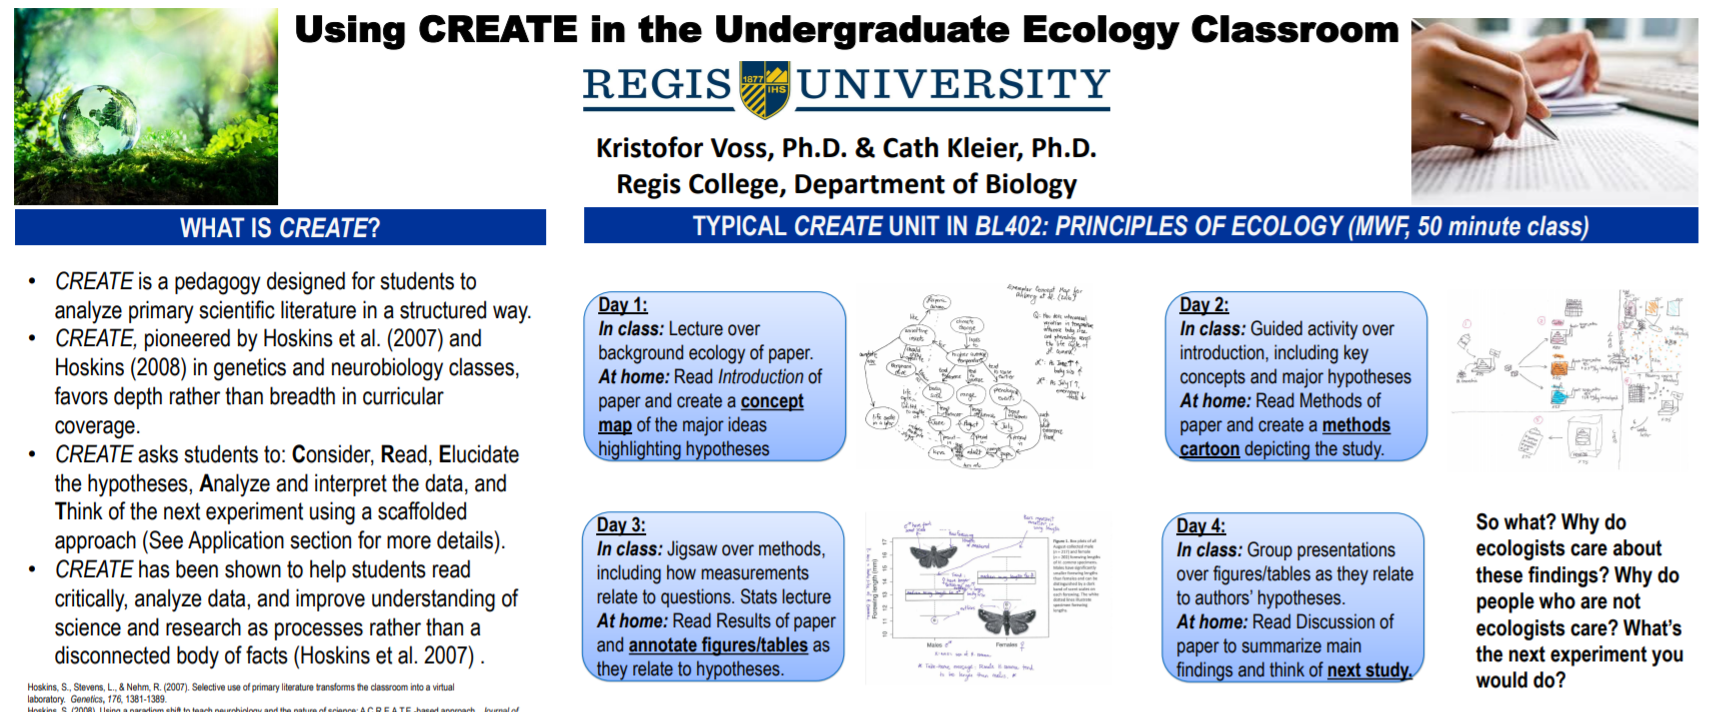 Using CREATE in the Undergraduate Ecology Classroom